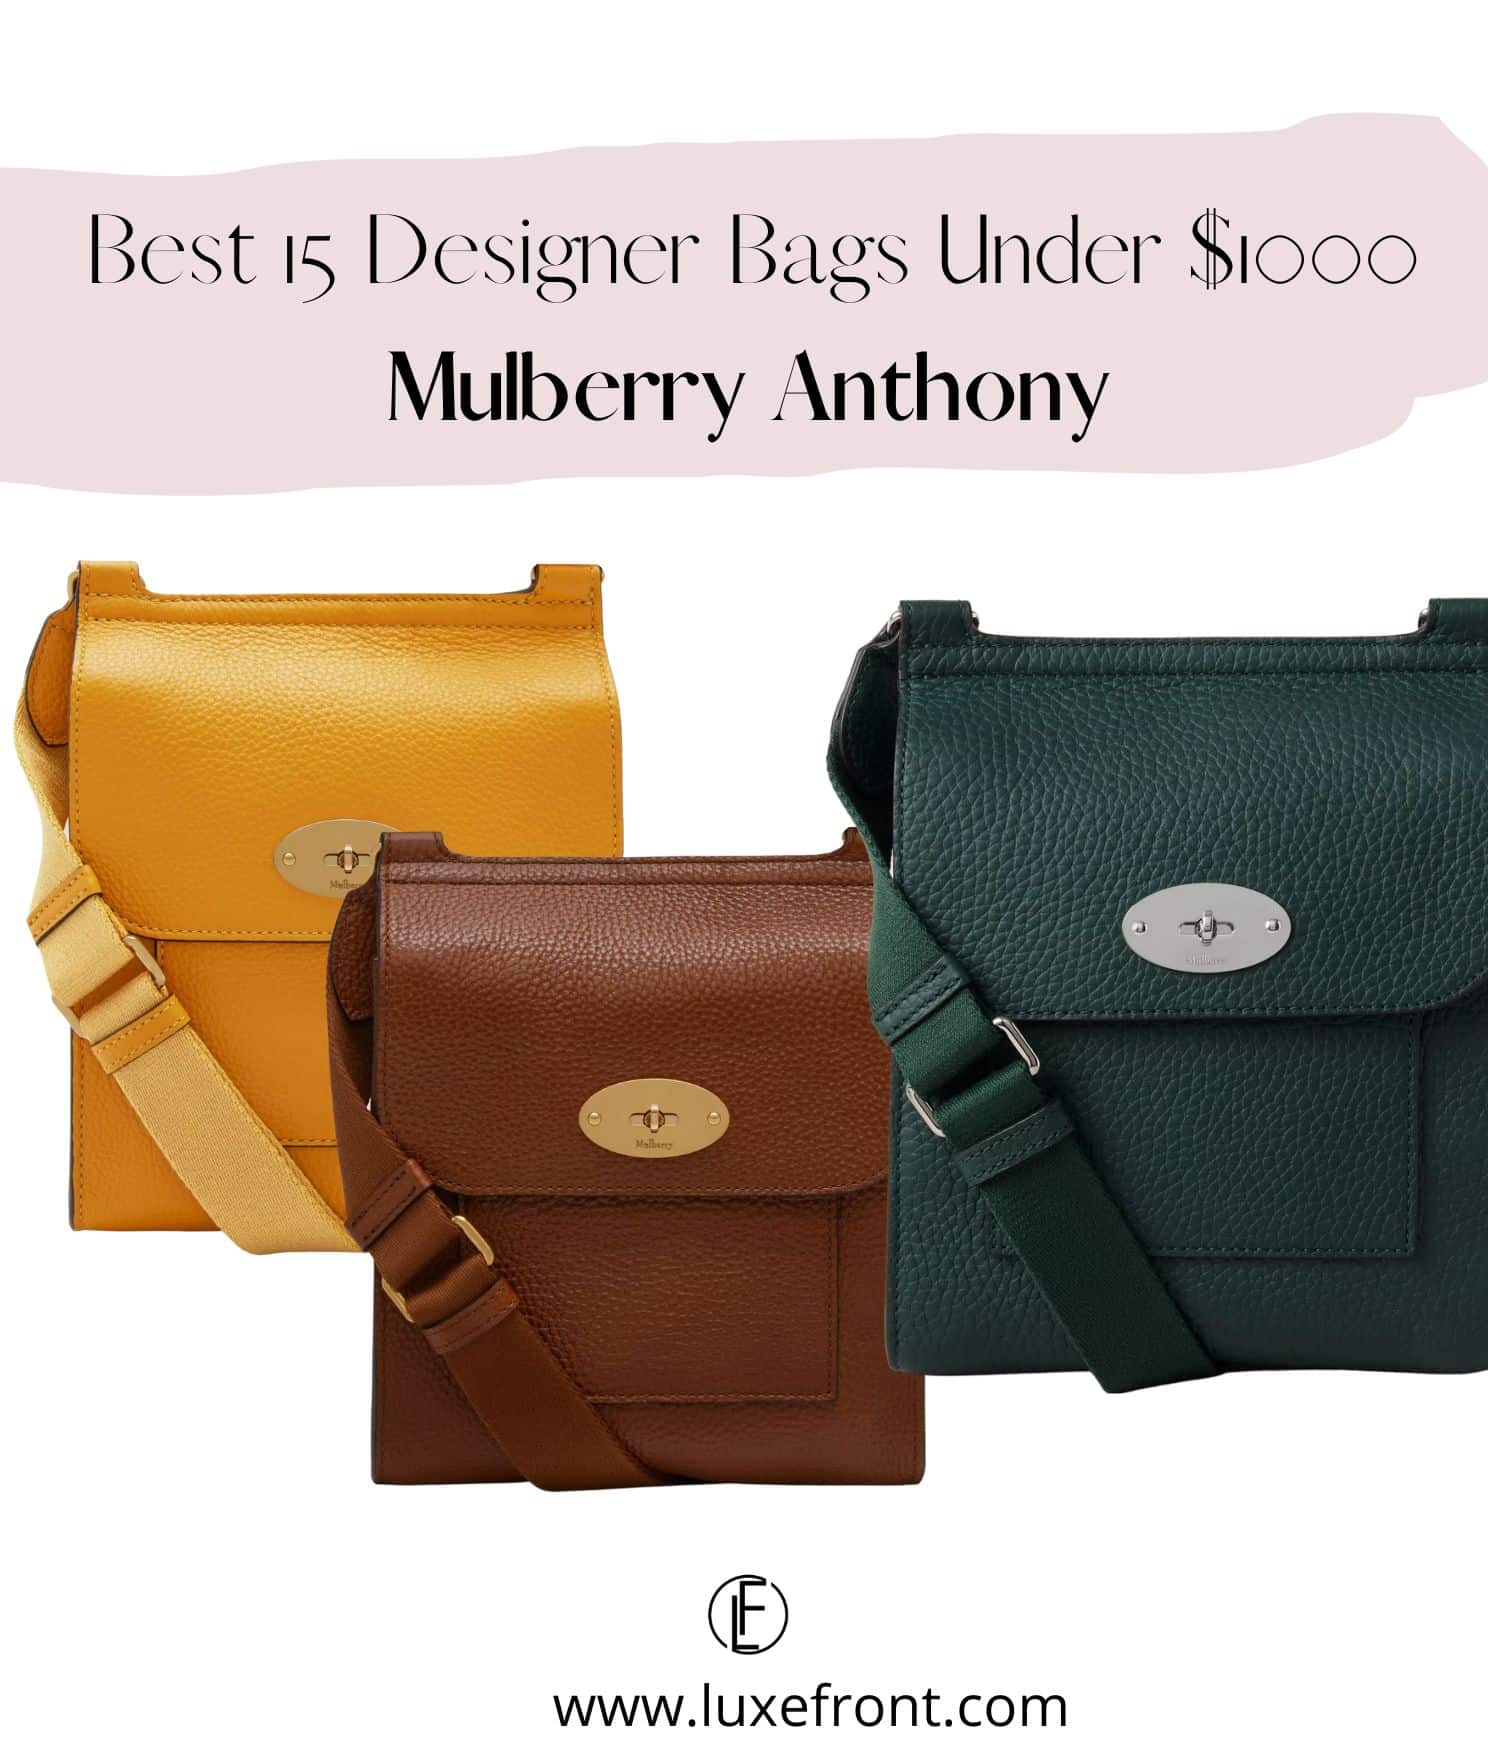 Best designer bags under $1000 